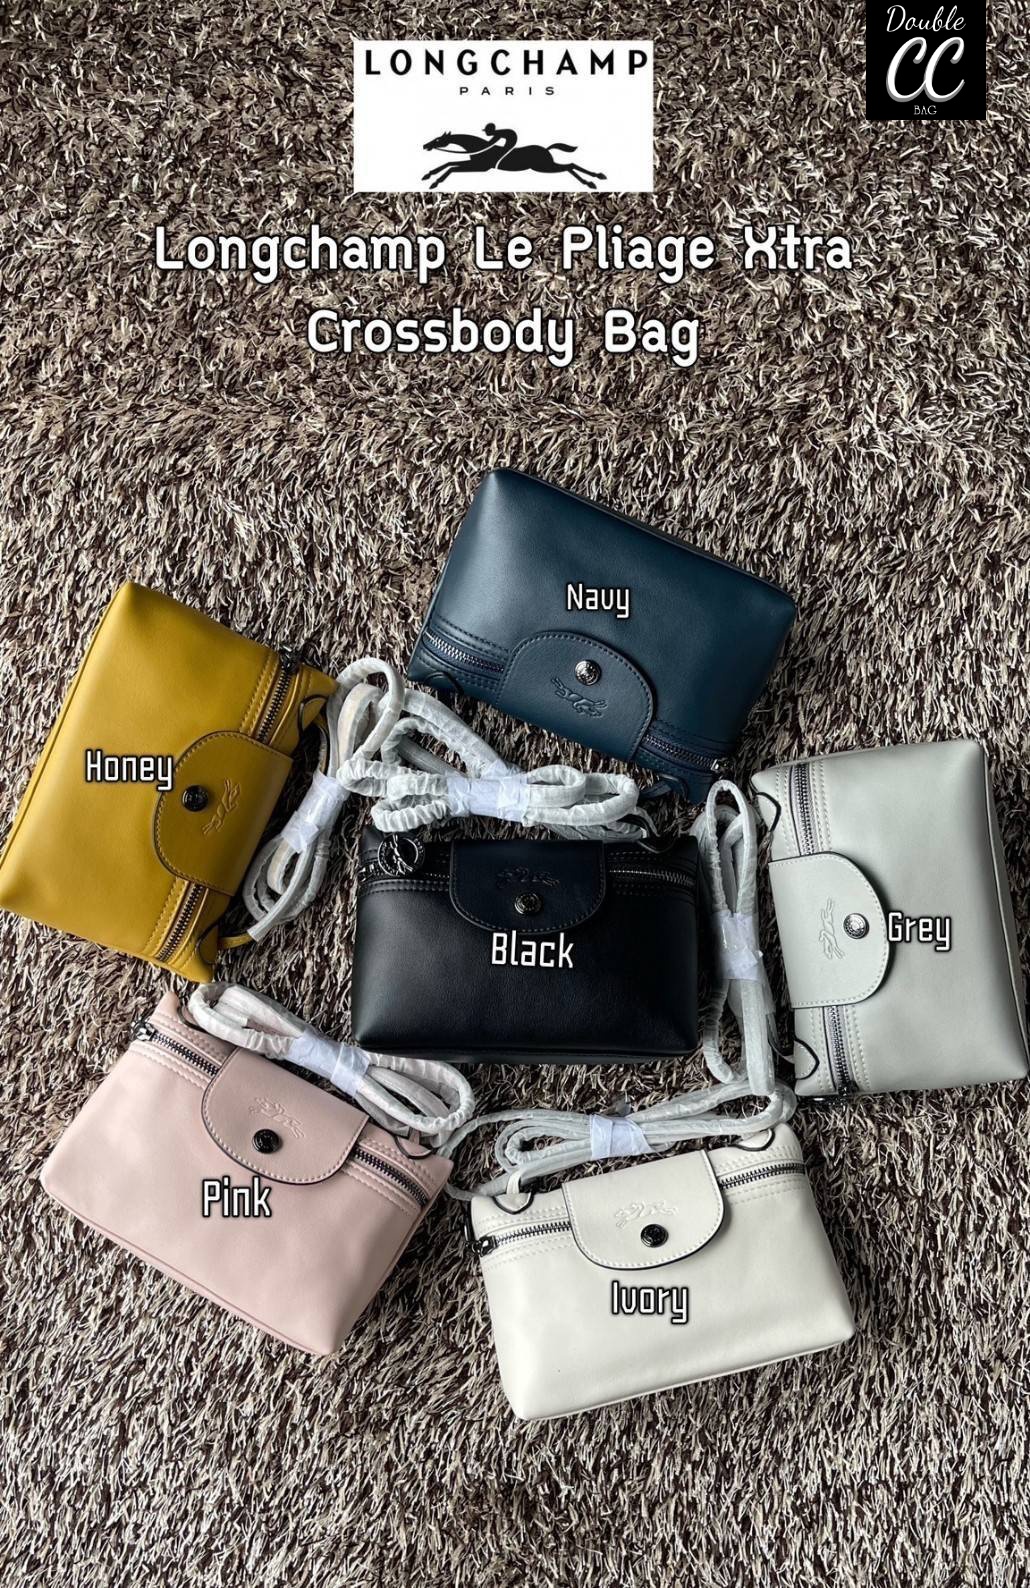 Le Pliage Xtra XS Crossbody bag Black - Leather (10188987001)